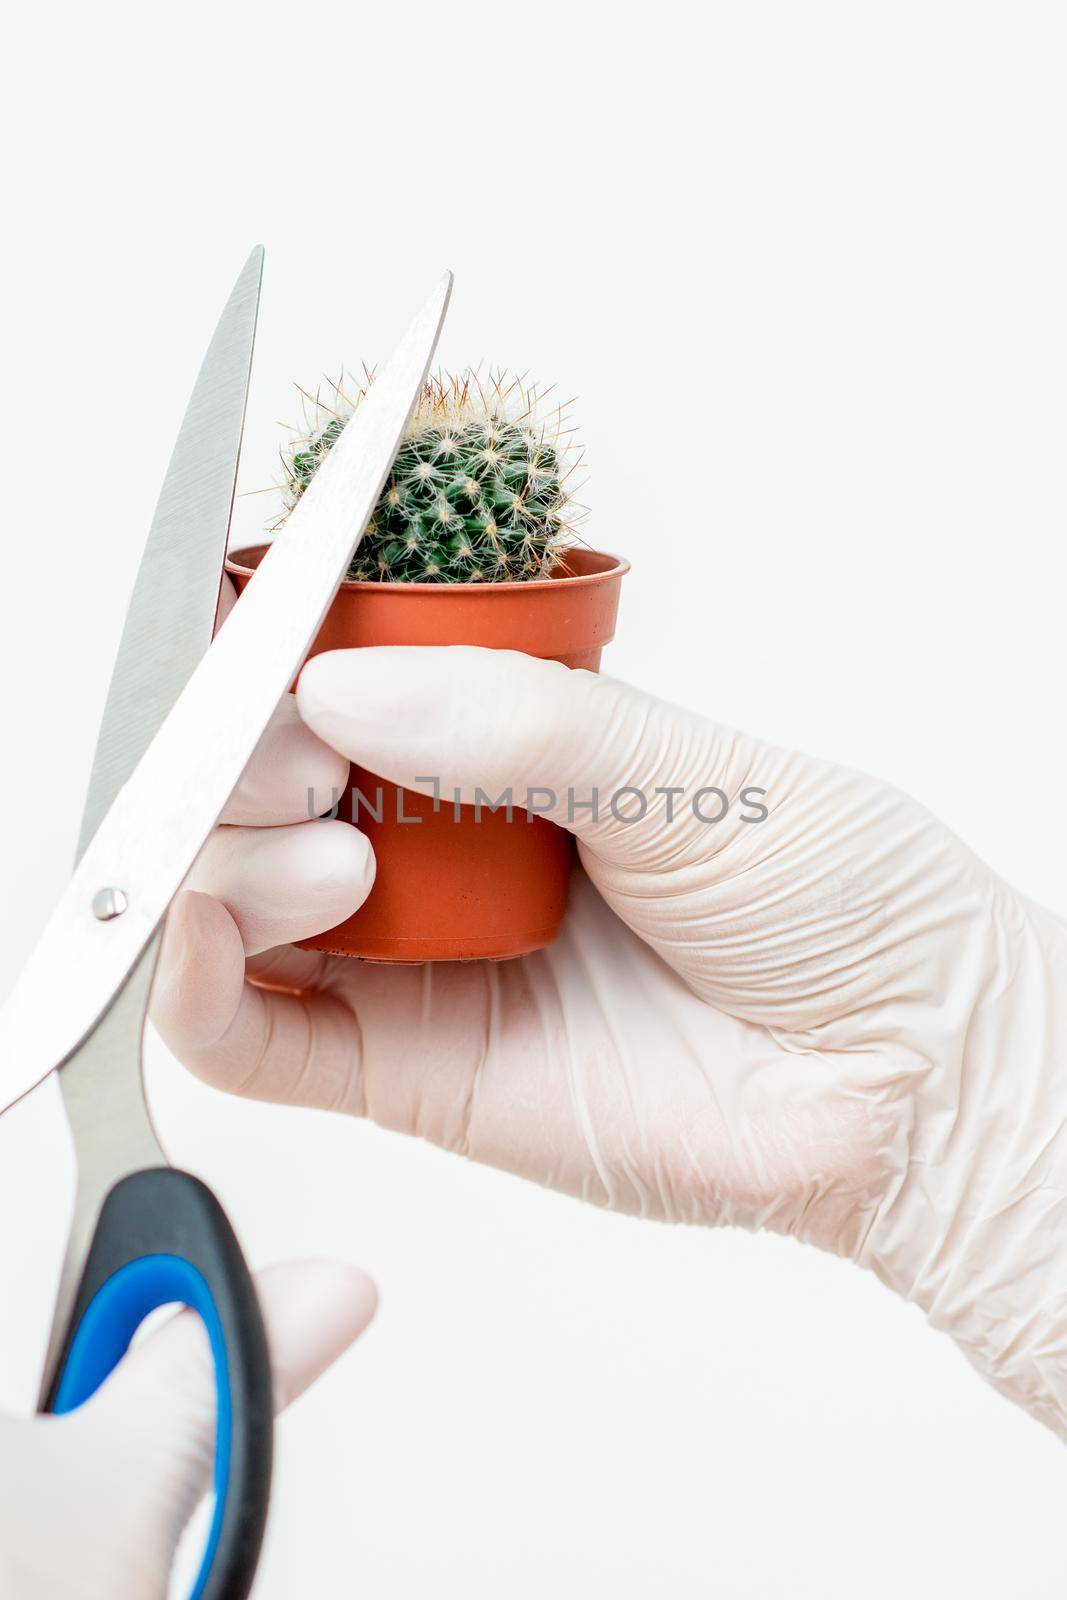 Hands cutting thorn of cactus by okskukuruza